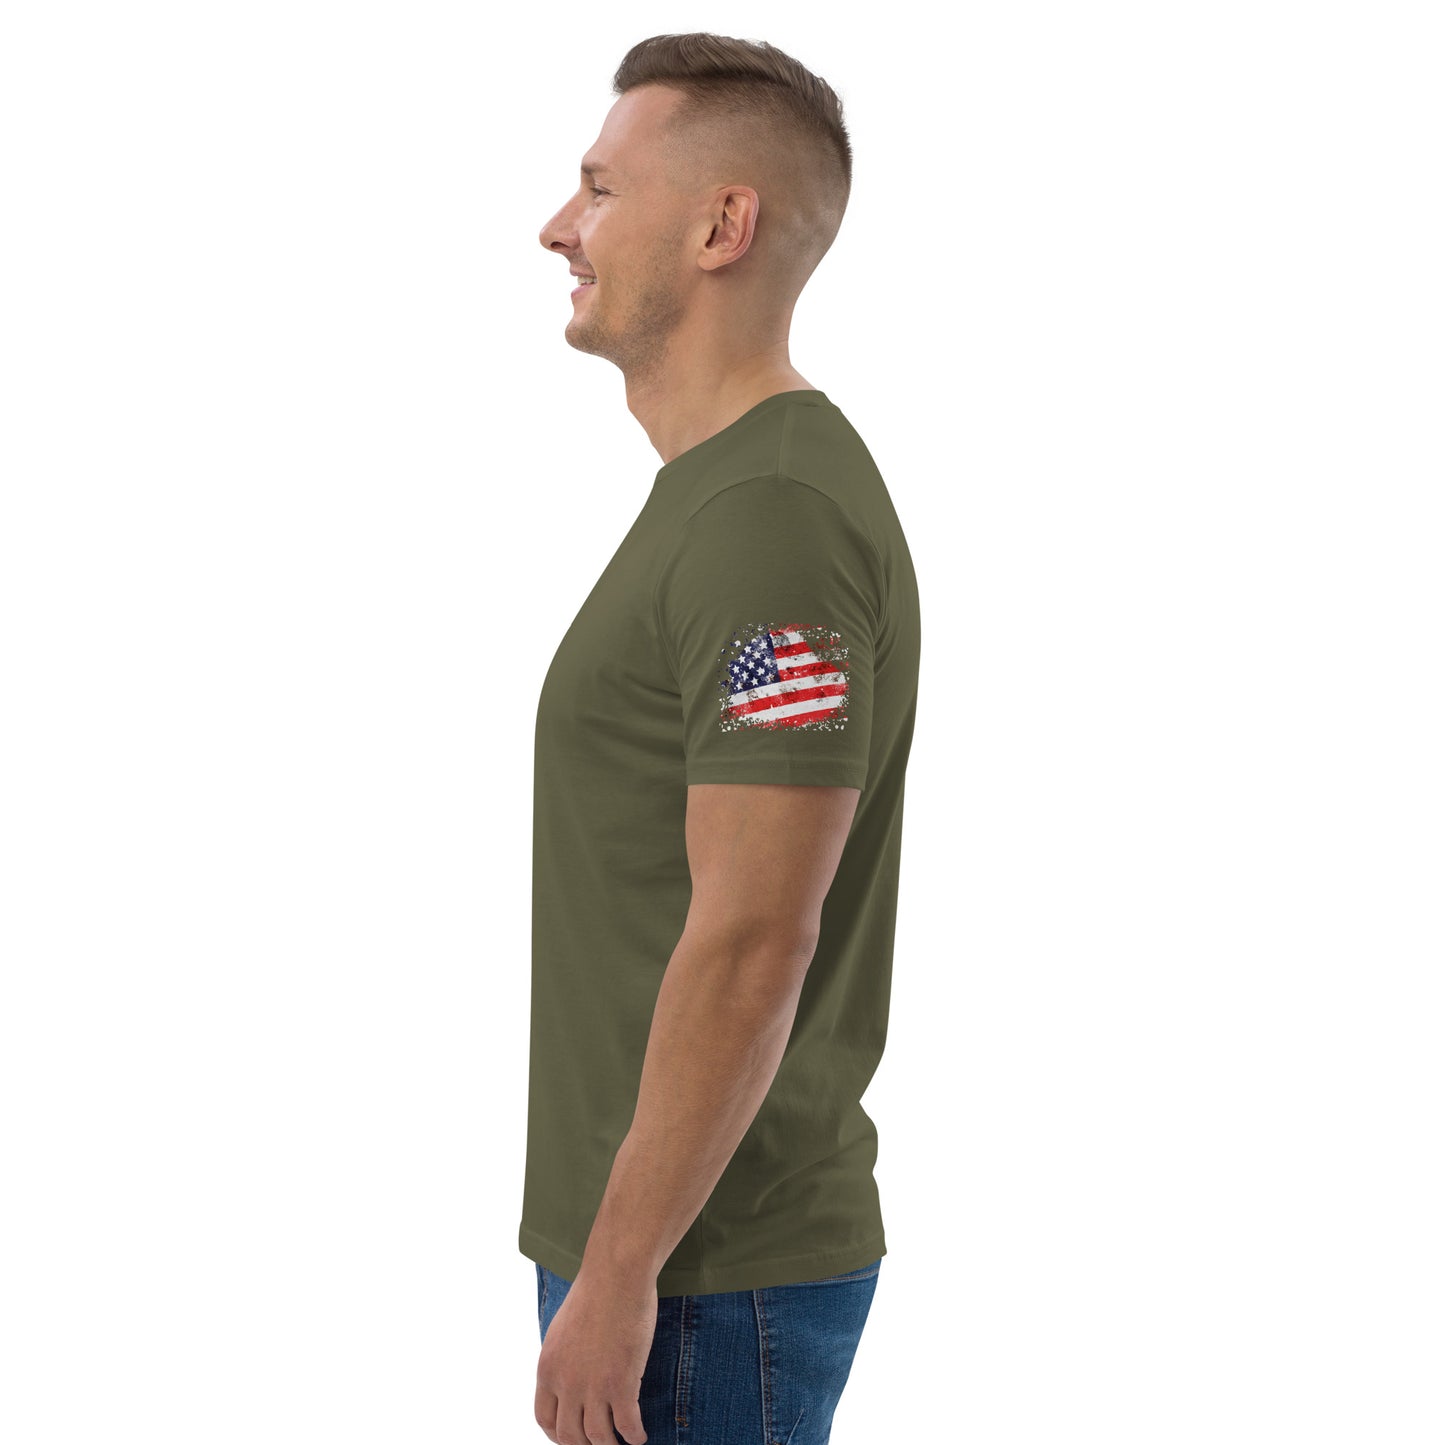 American Jujitsu with American flag on sleeve organic cotton t-shirt!